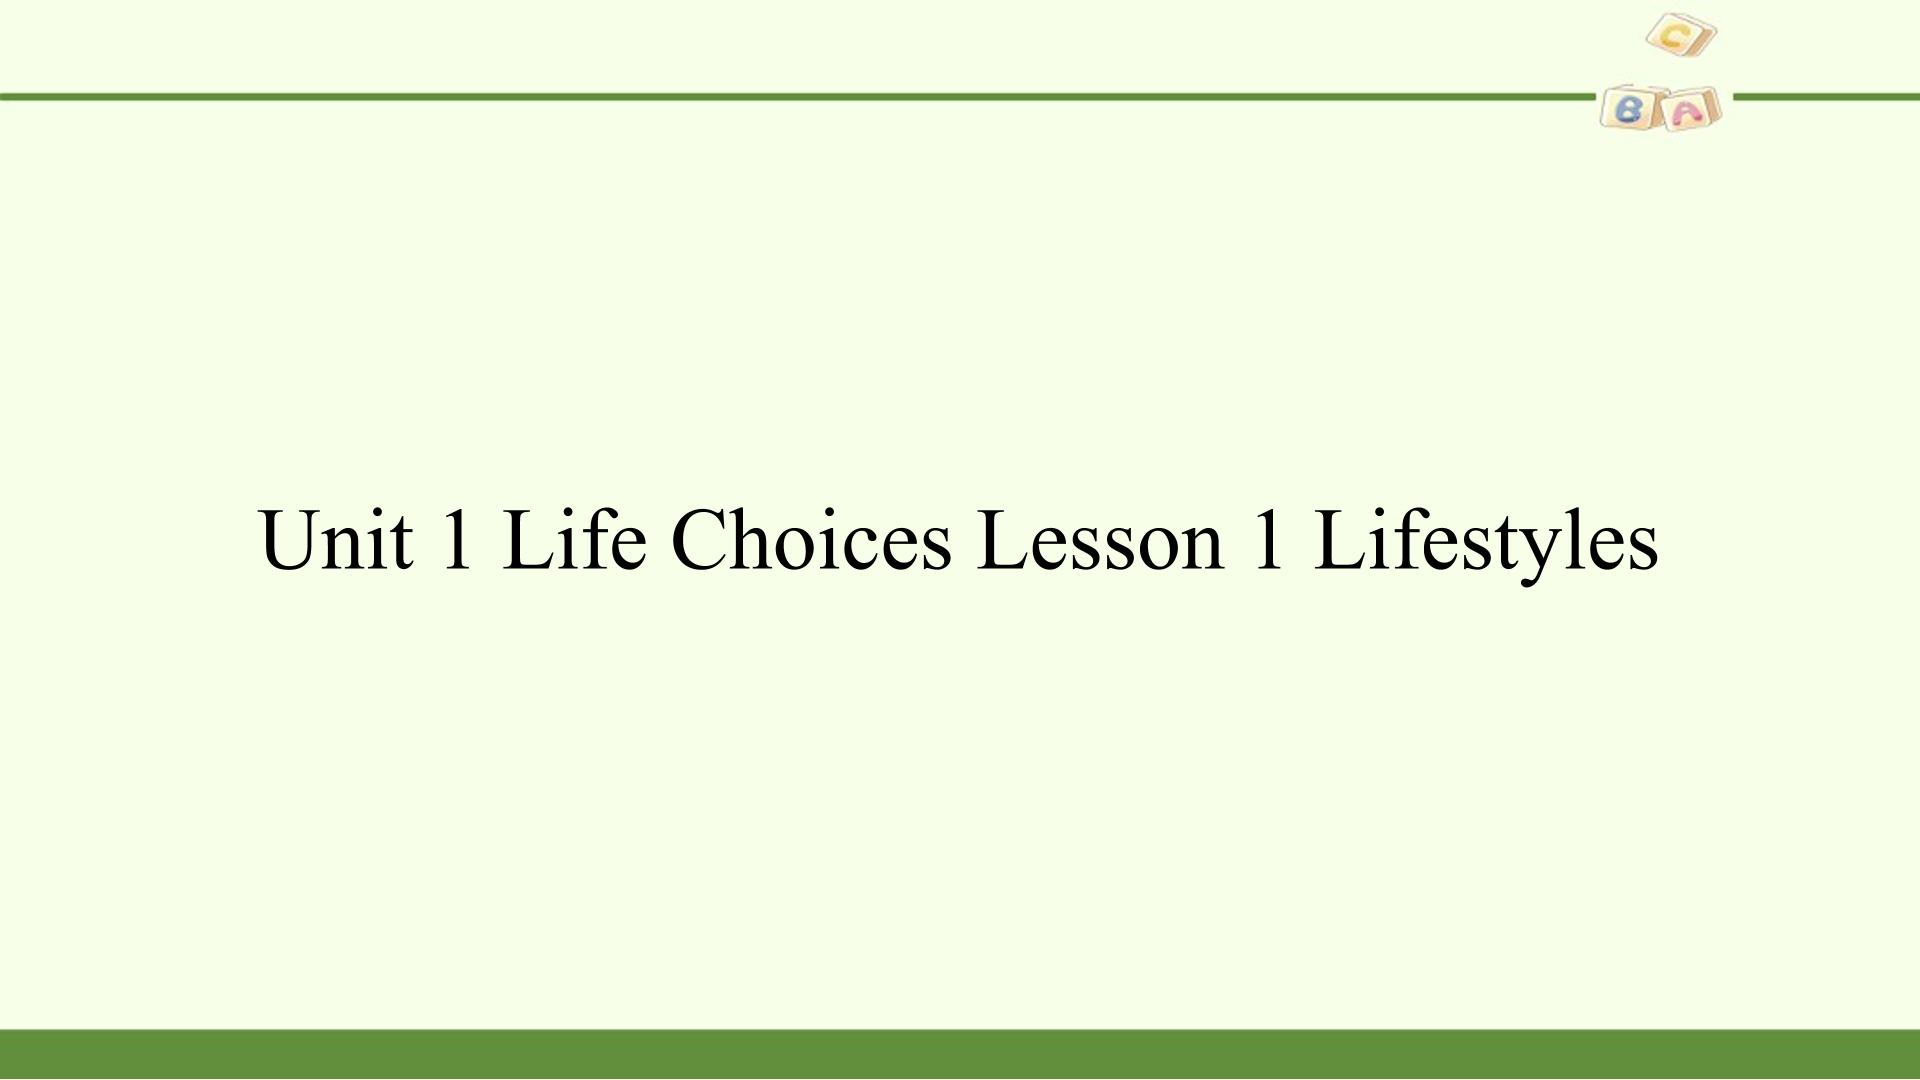 Lesson 1 Lifestyles